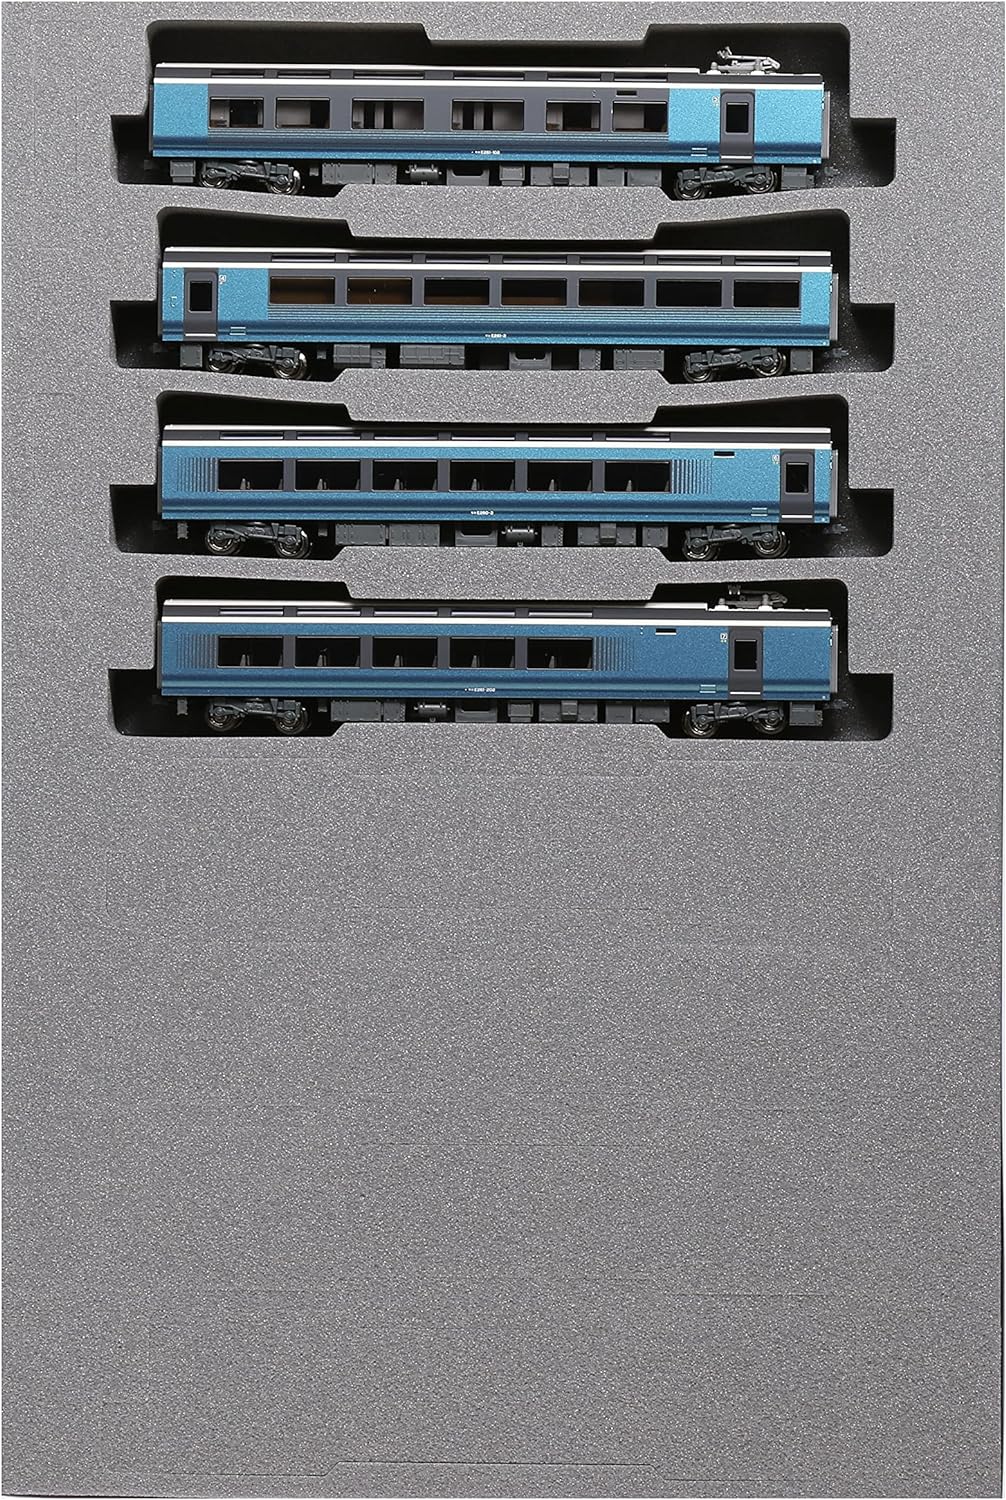 KATO 10-1662 N Gauge E261 Series Safir Odoriko Extension Set, 4 Cars, Train Model - BanzaiHobby